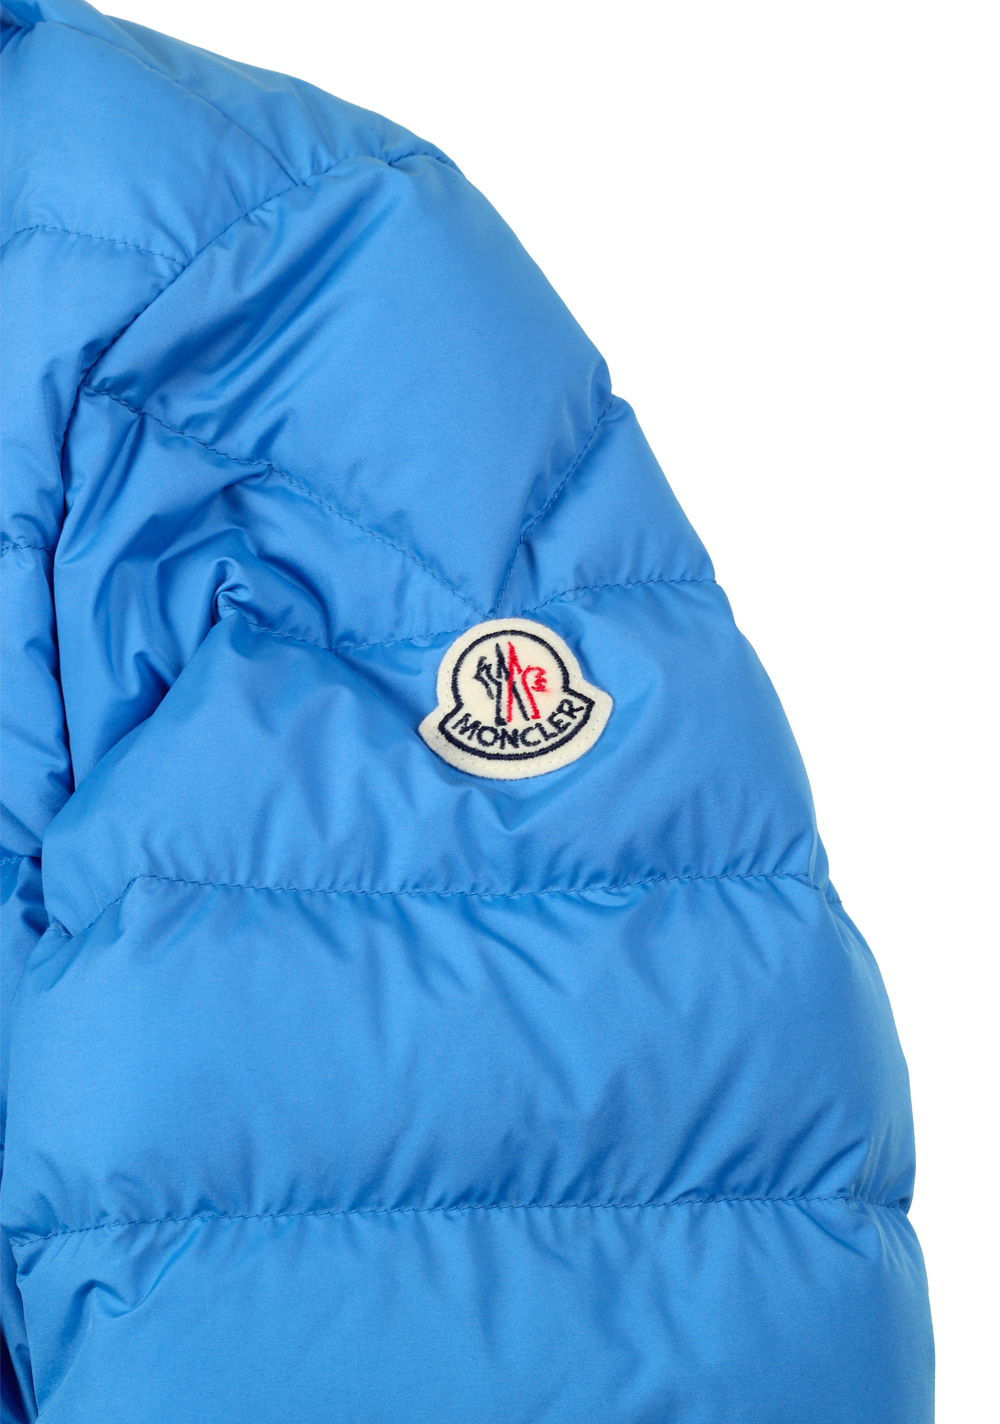 Moncler Blue CYCLOPE Quilted Down Jacket Coat Size 1 / S / 46 / 36 U.S. | Costume Limité